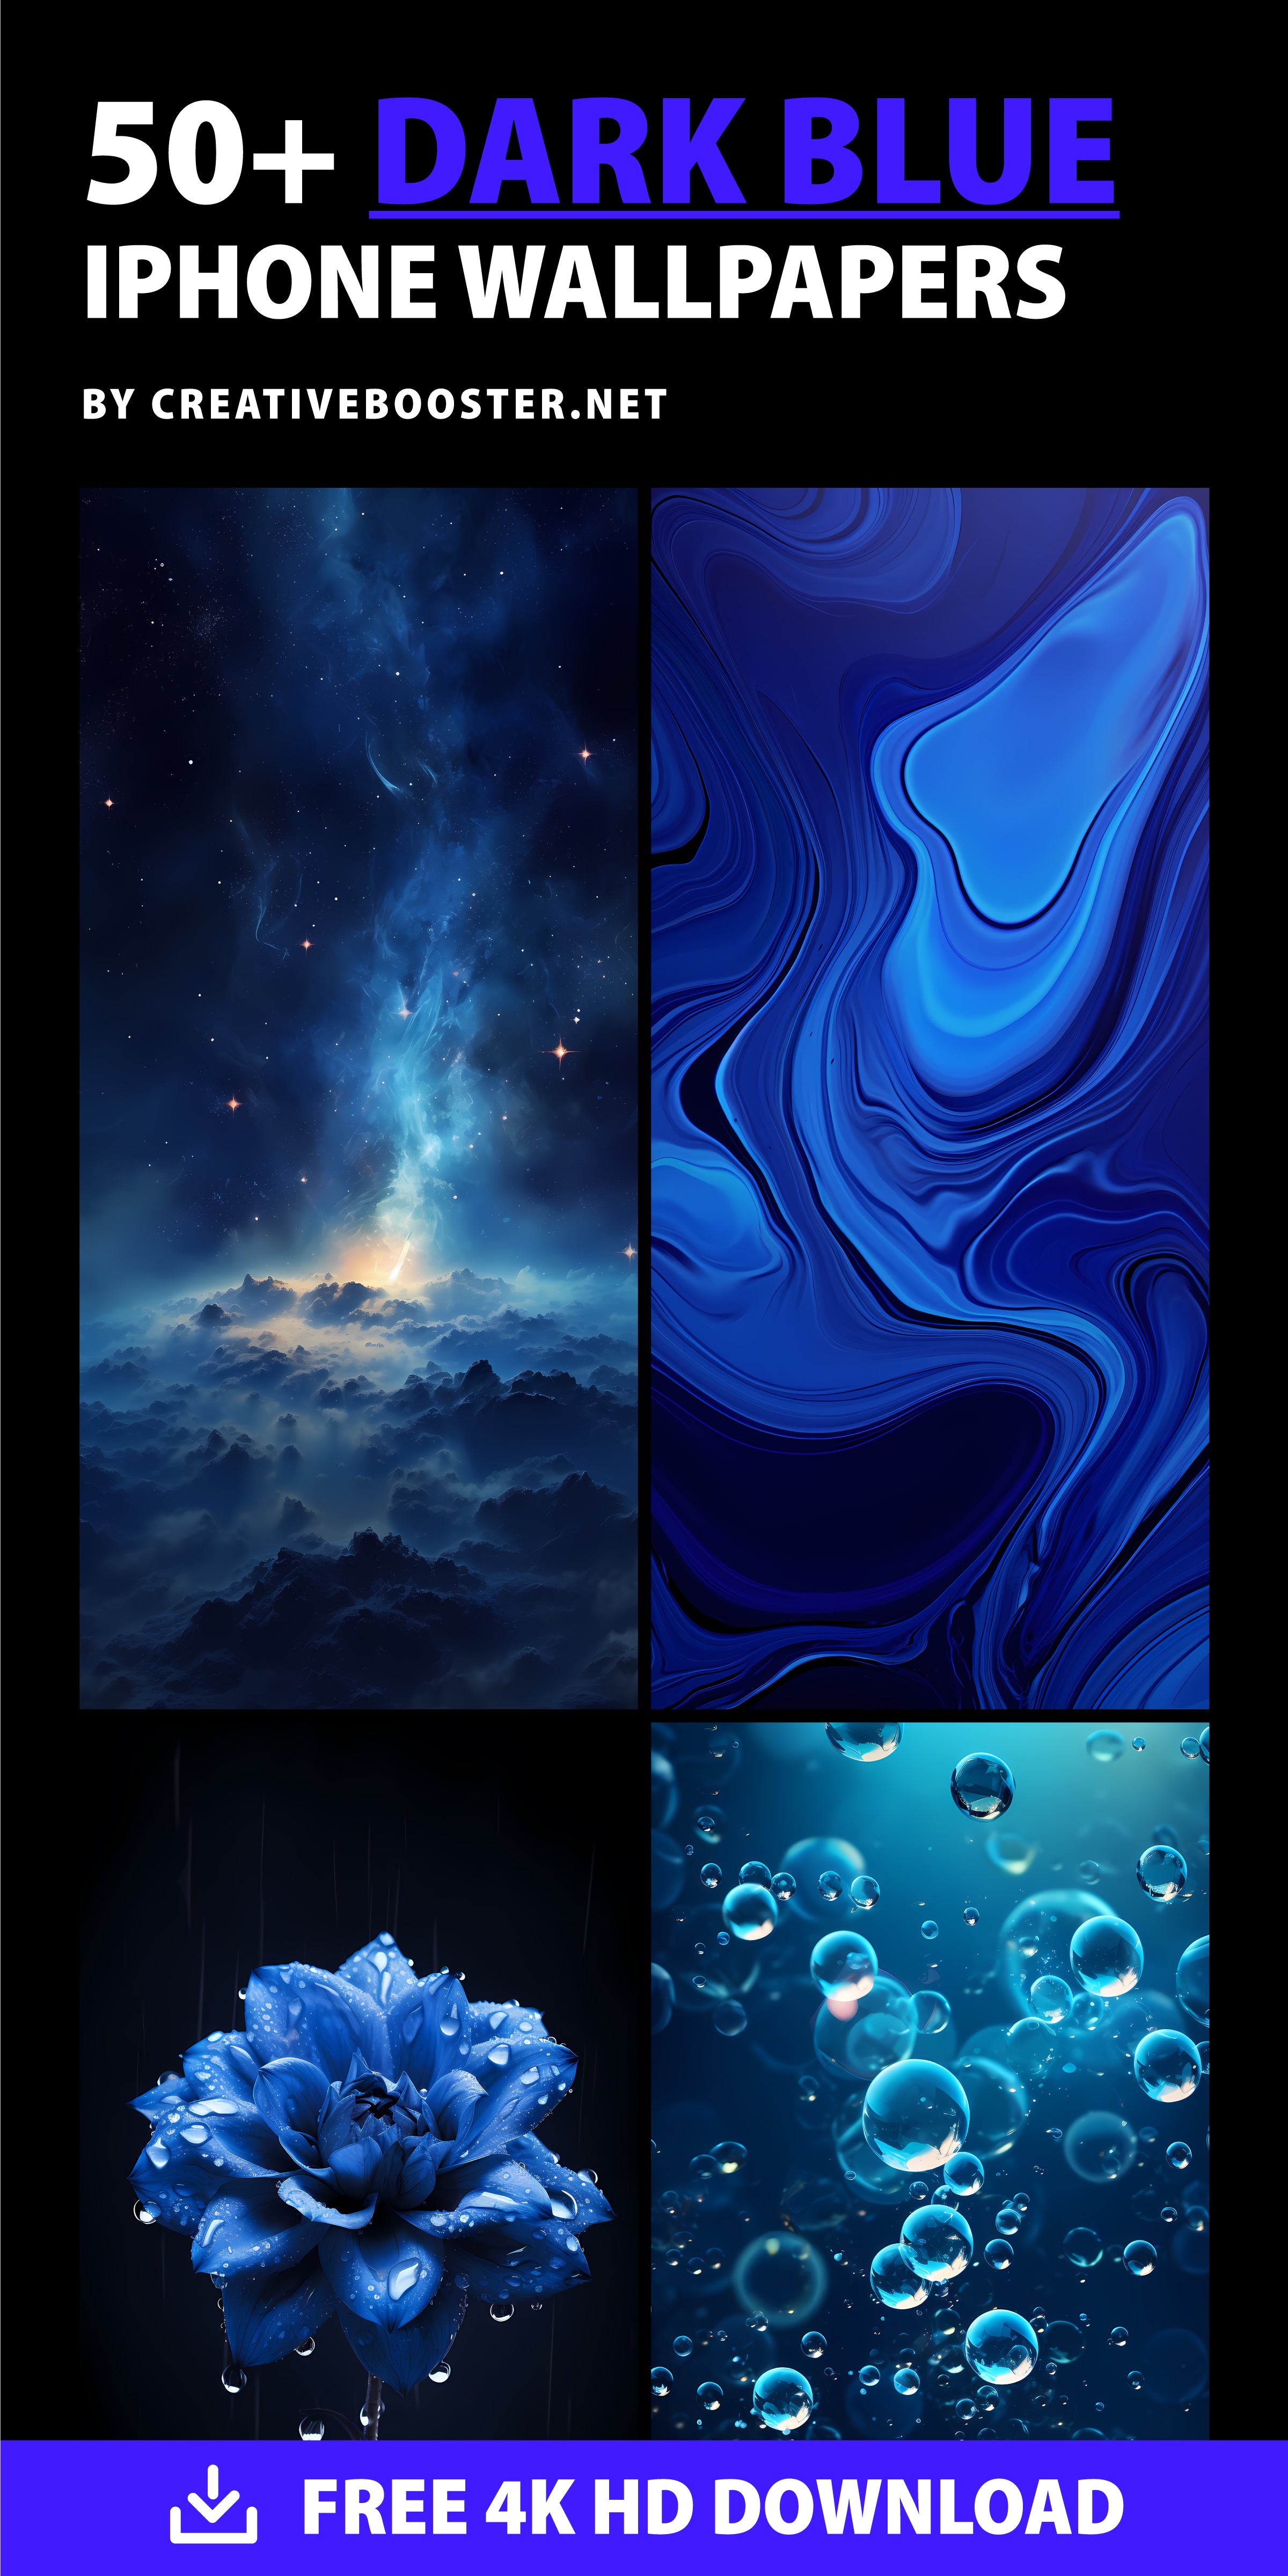 Dark-Blue-iPhone-Wallpaper-Free-4k-HD-Download-Pinterest